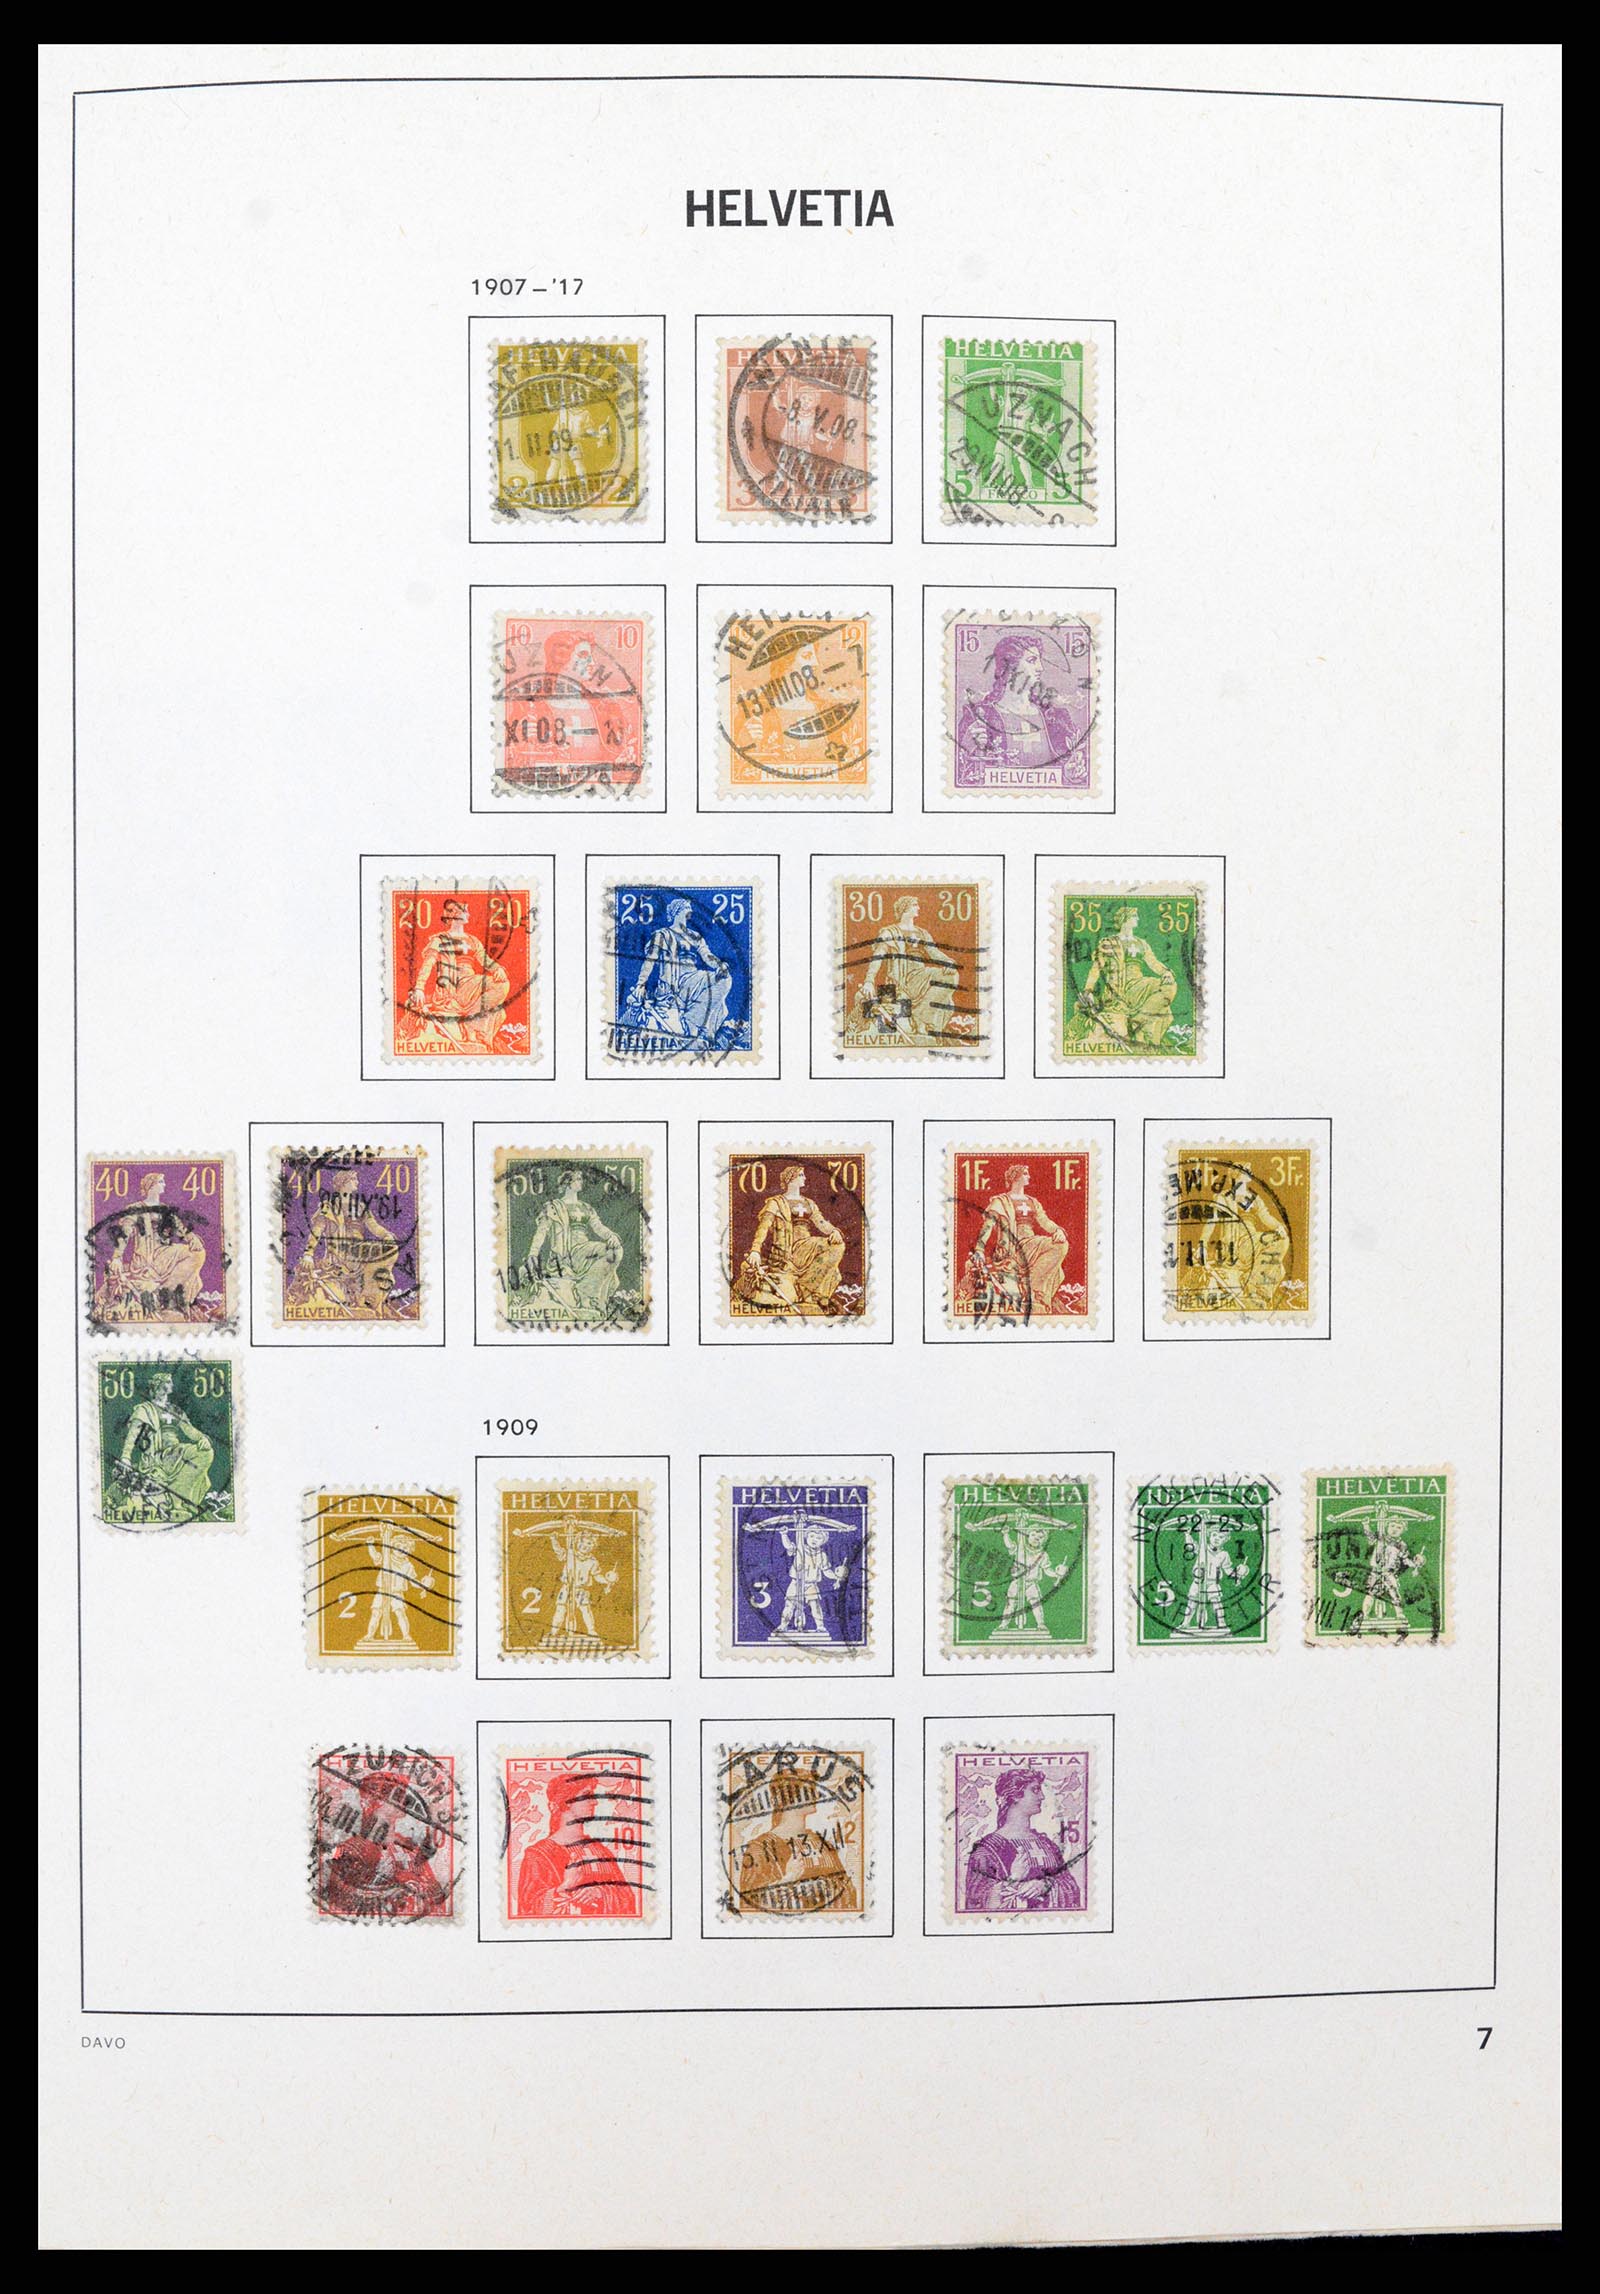 37496 006 - Stamp collection 37496 Switzerland 1854-2002.